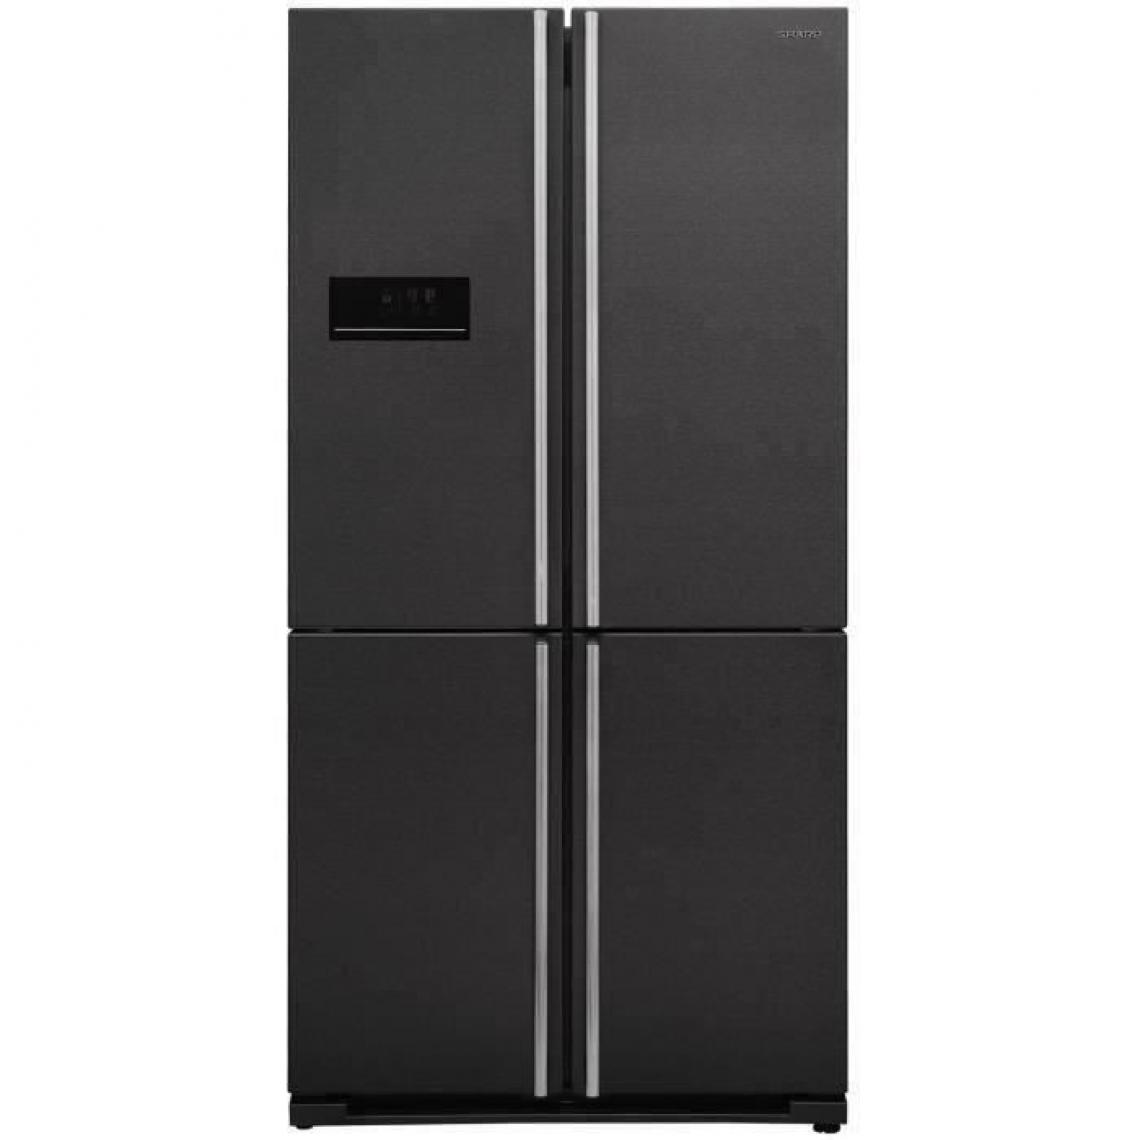 Sharp - SHARP Réfrigérateur 4 Portes, 588 L, Dark inox - Réfrigérateur